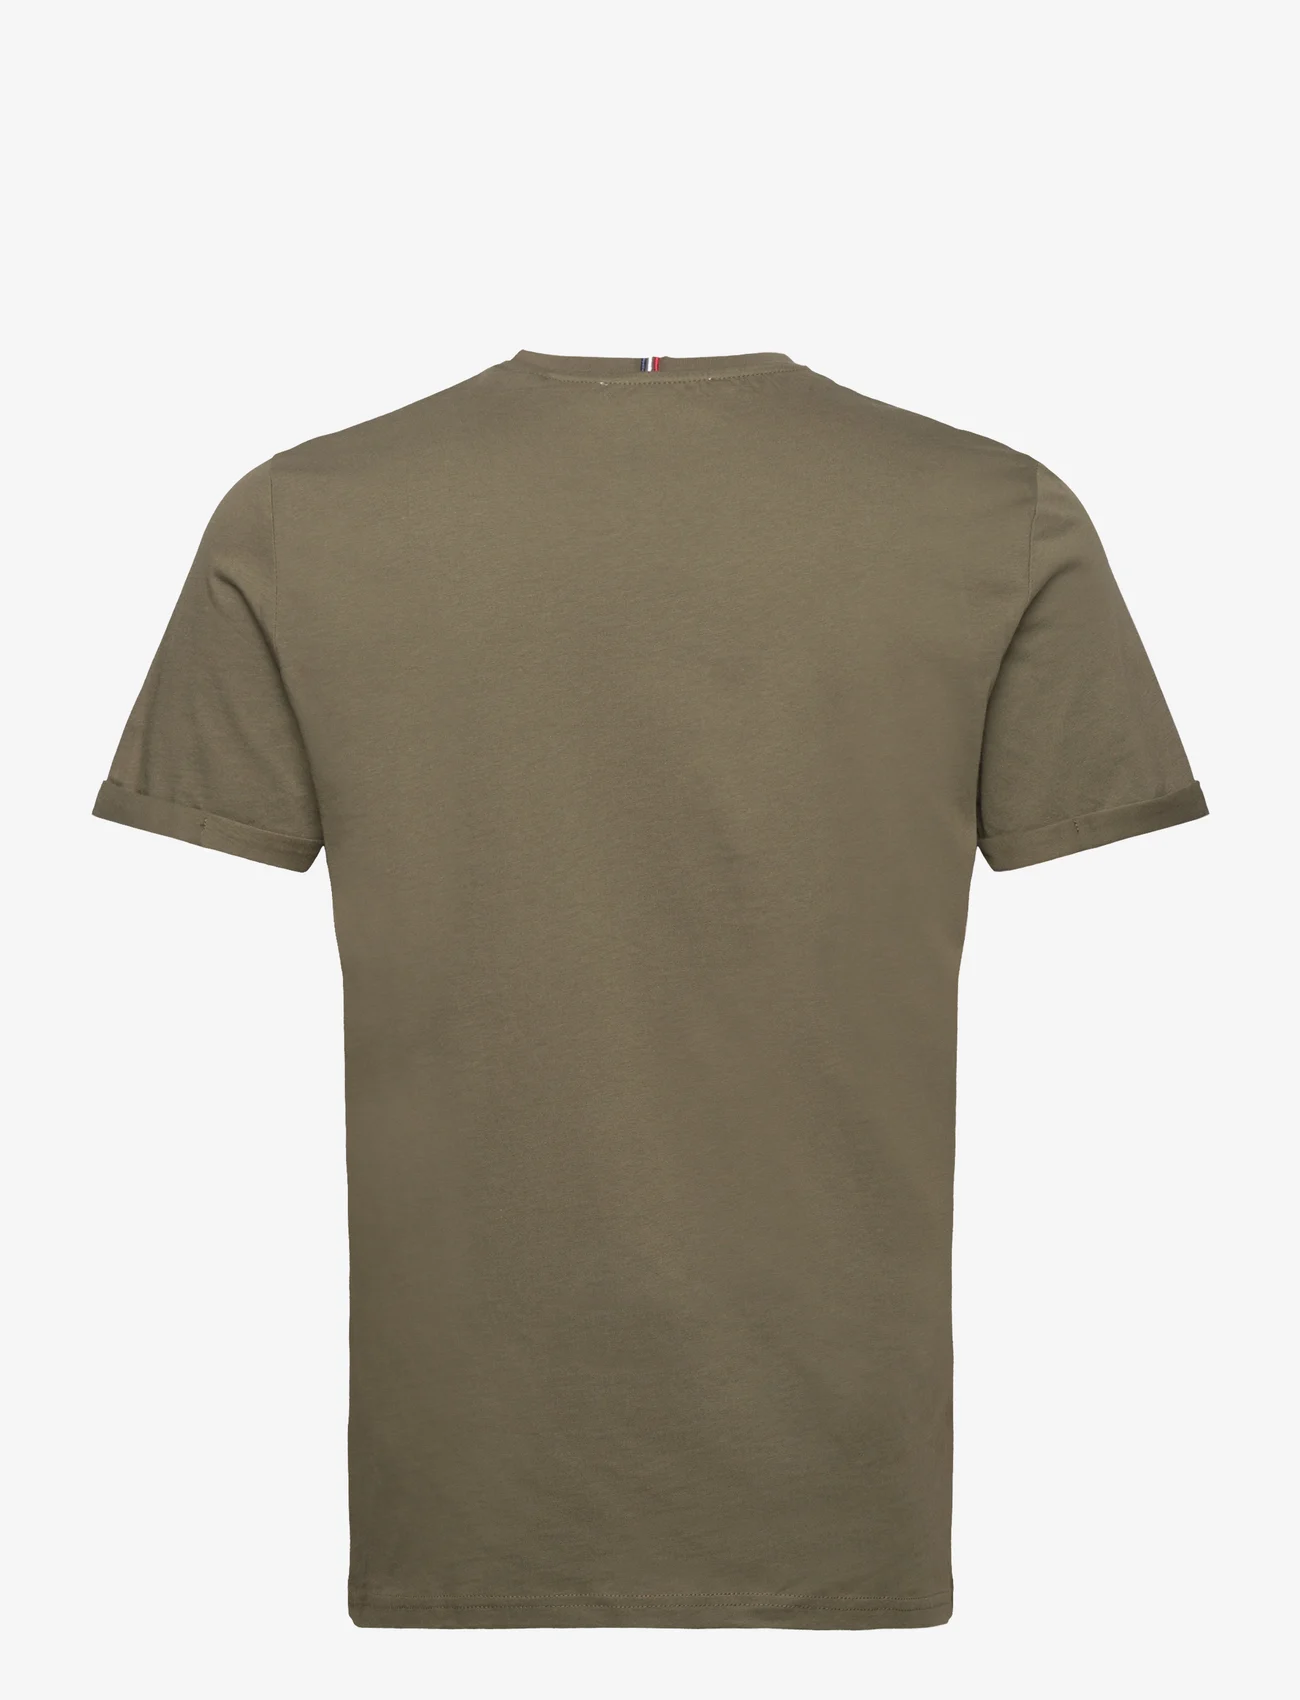 Les Deux - Les Deux II T-Shirt 2.0 - kortärmade t-shirts - olive night/light platinum - 1